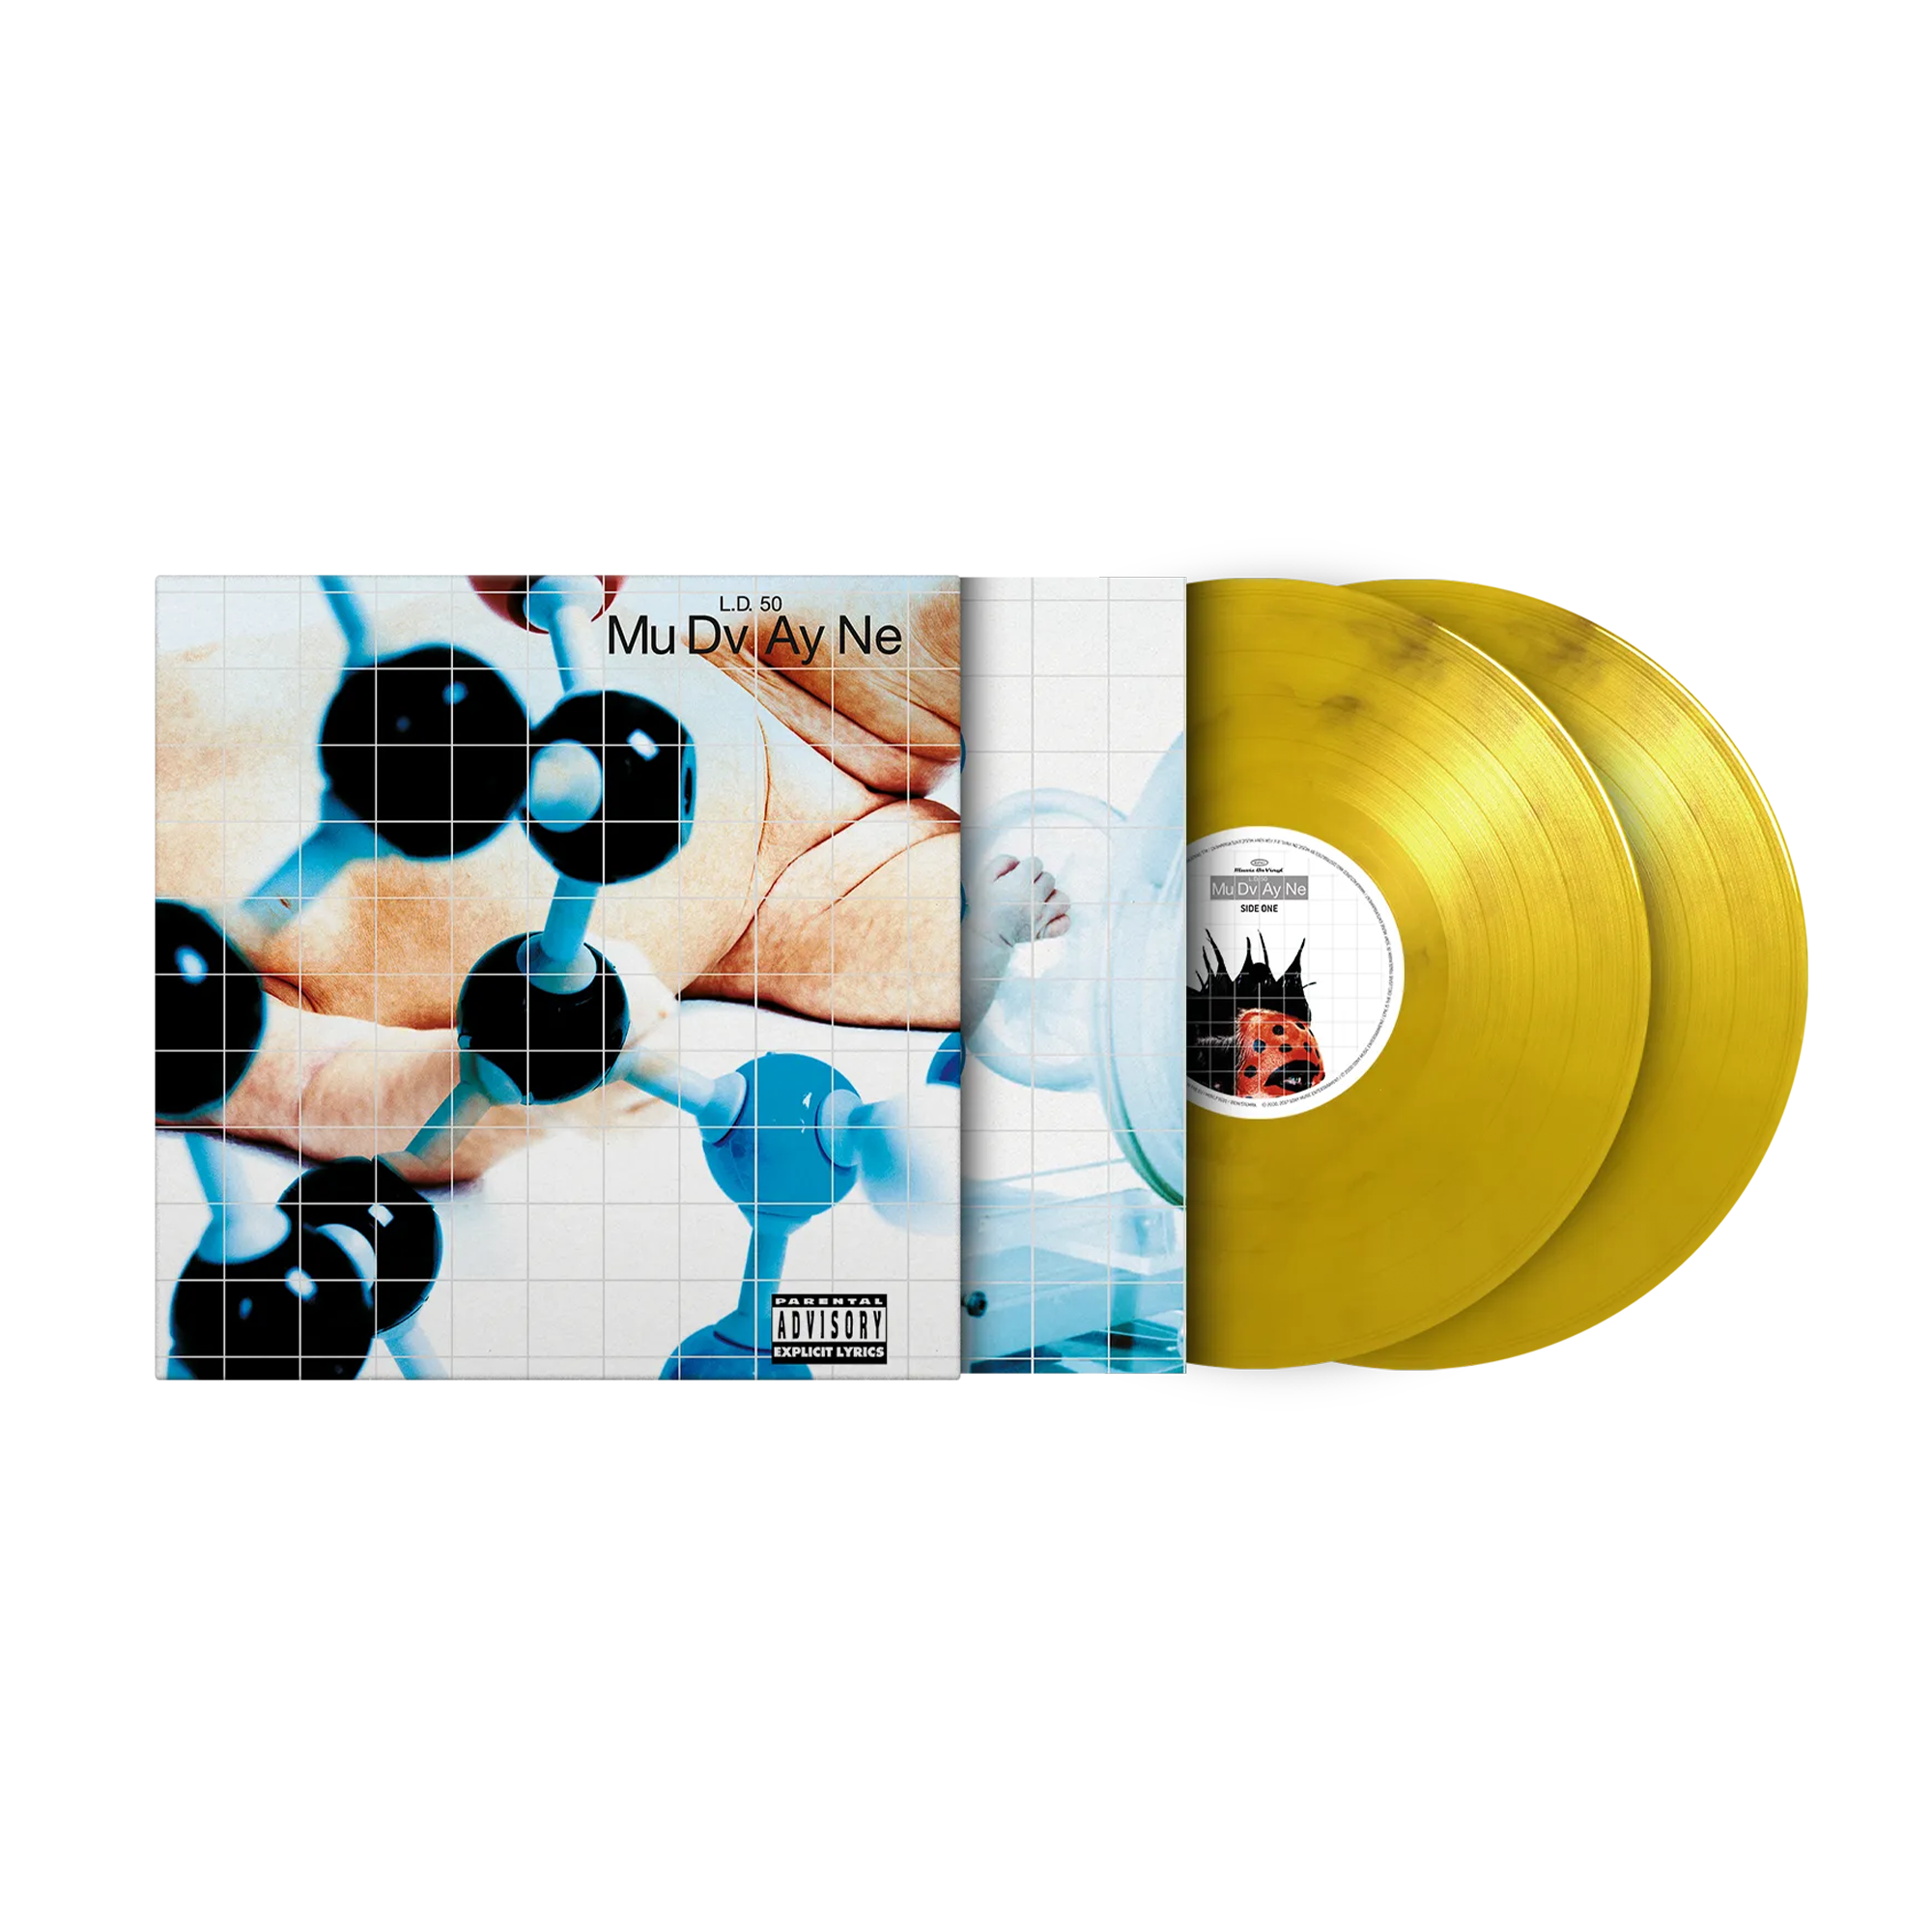 Mudvayne - L.D. 50: Yellow & Black Marbled Vinyl 2LP